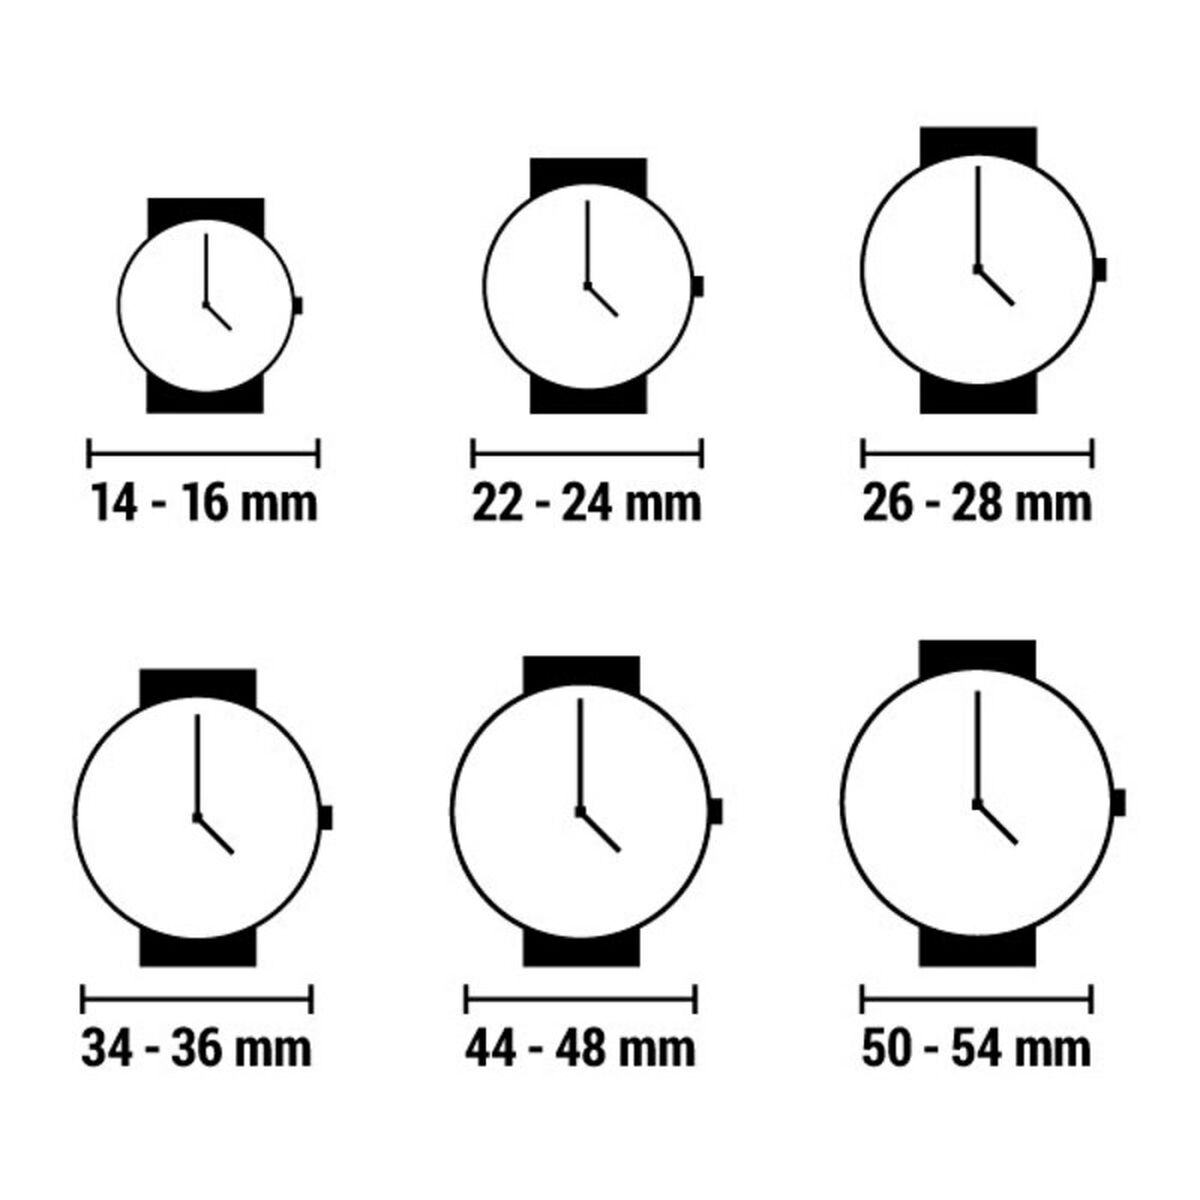 Horloge Dames Folli Follie wf15p027zsi (Ø 28 mm)